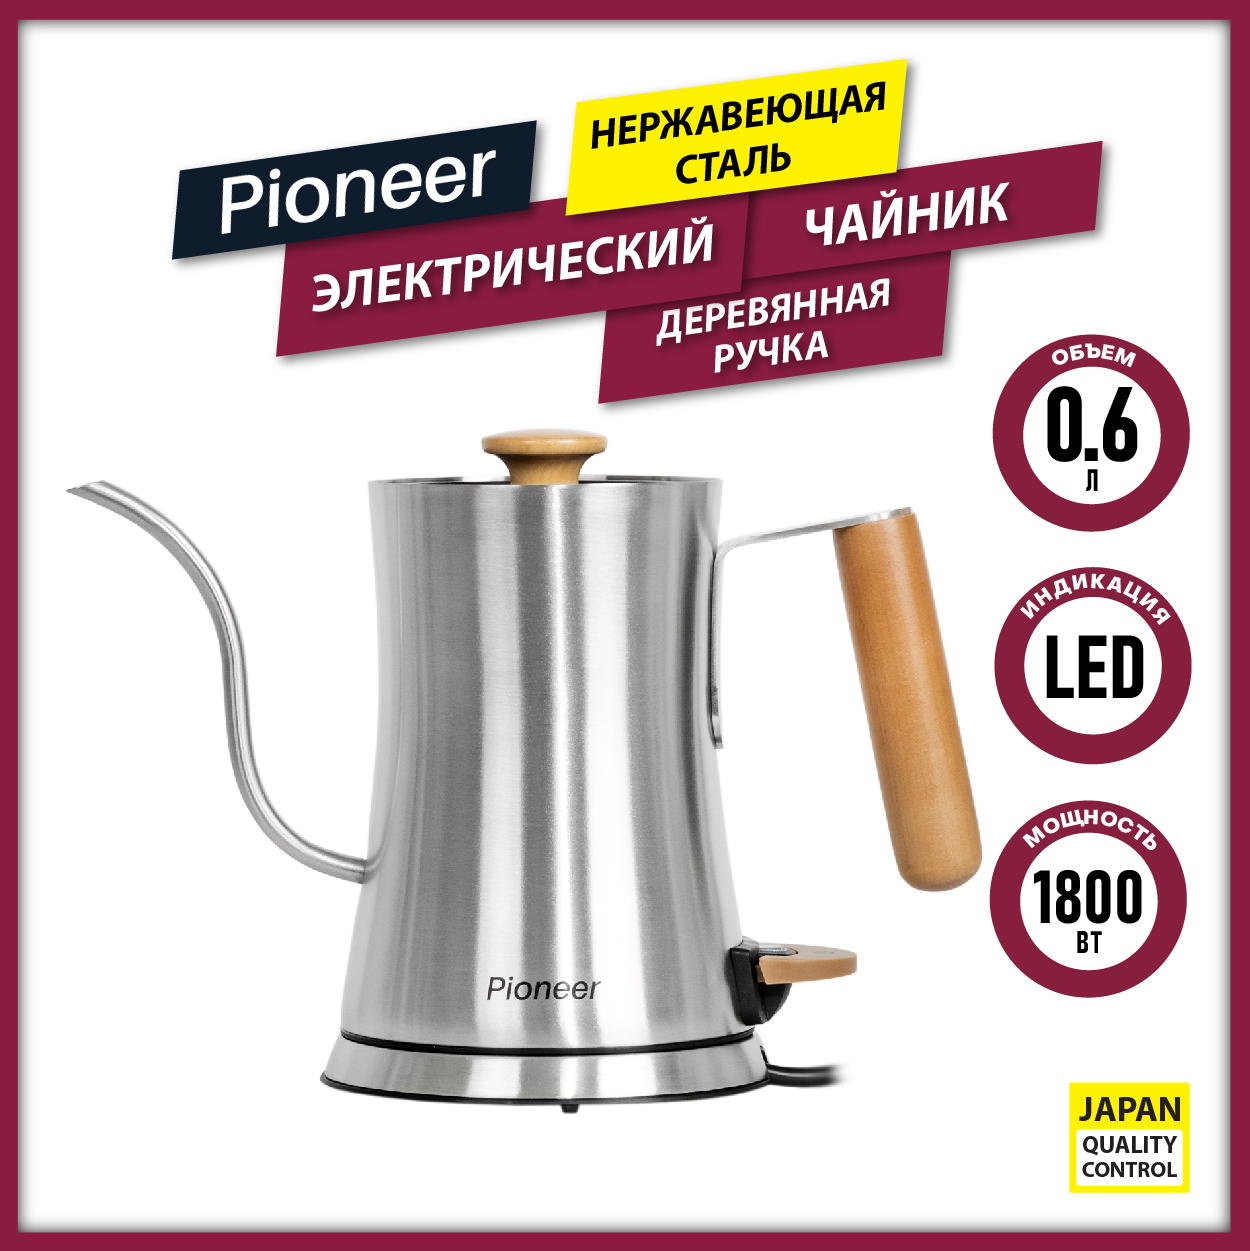 Чайник Pioneer KE572M